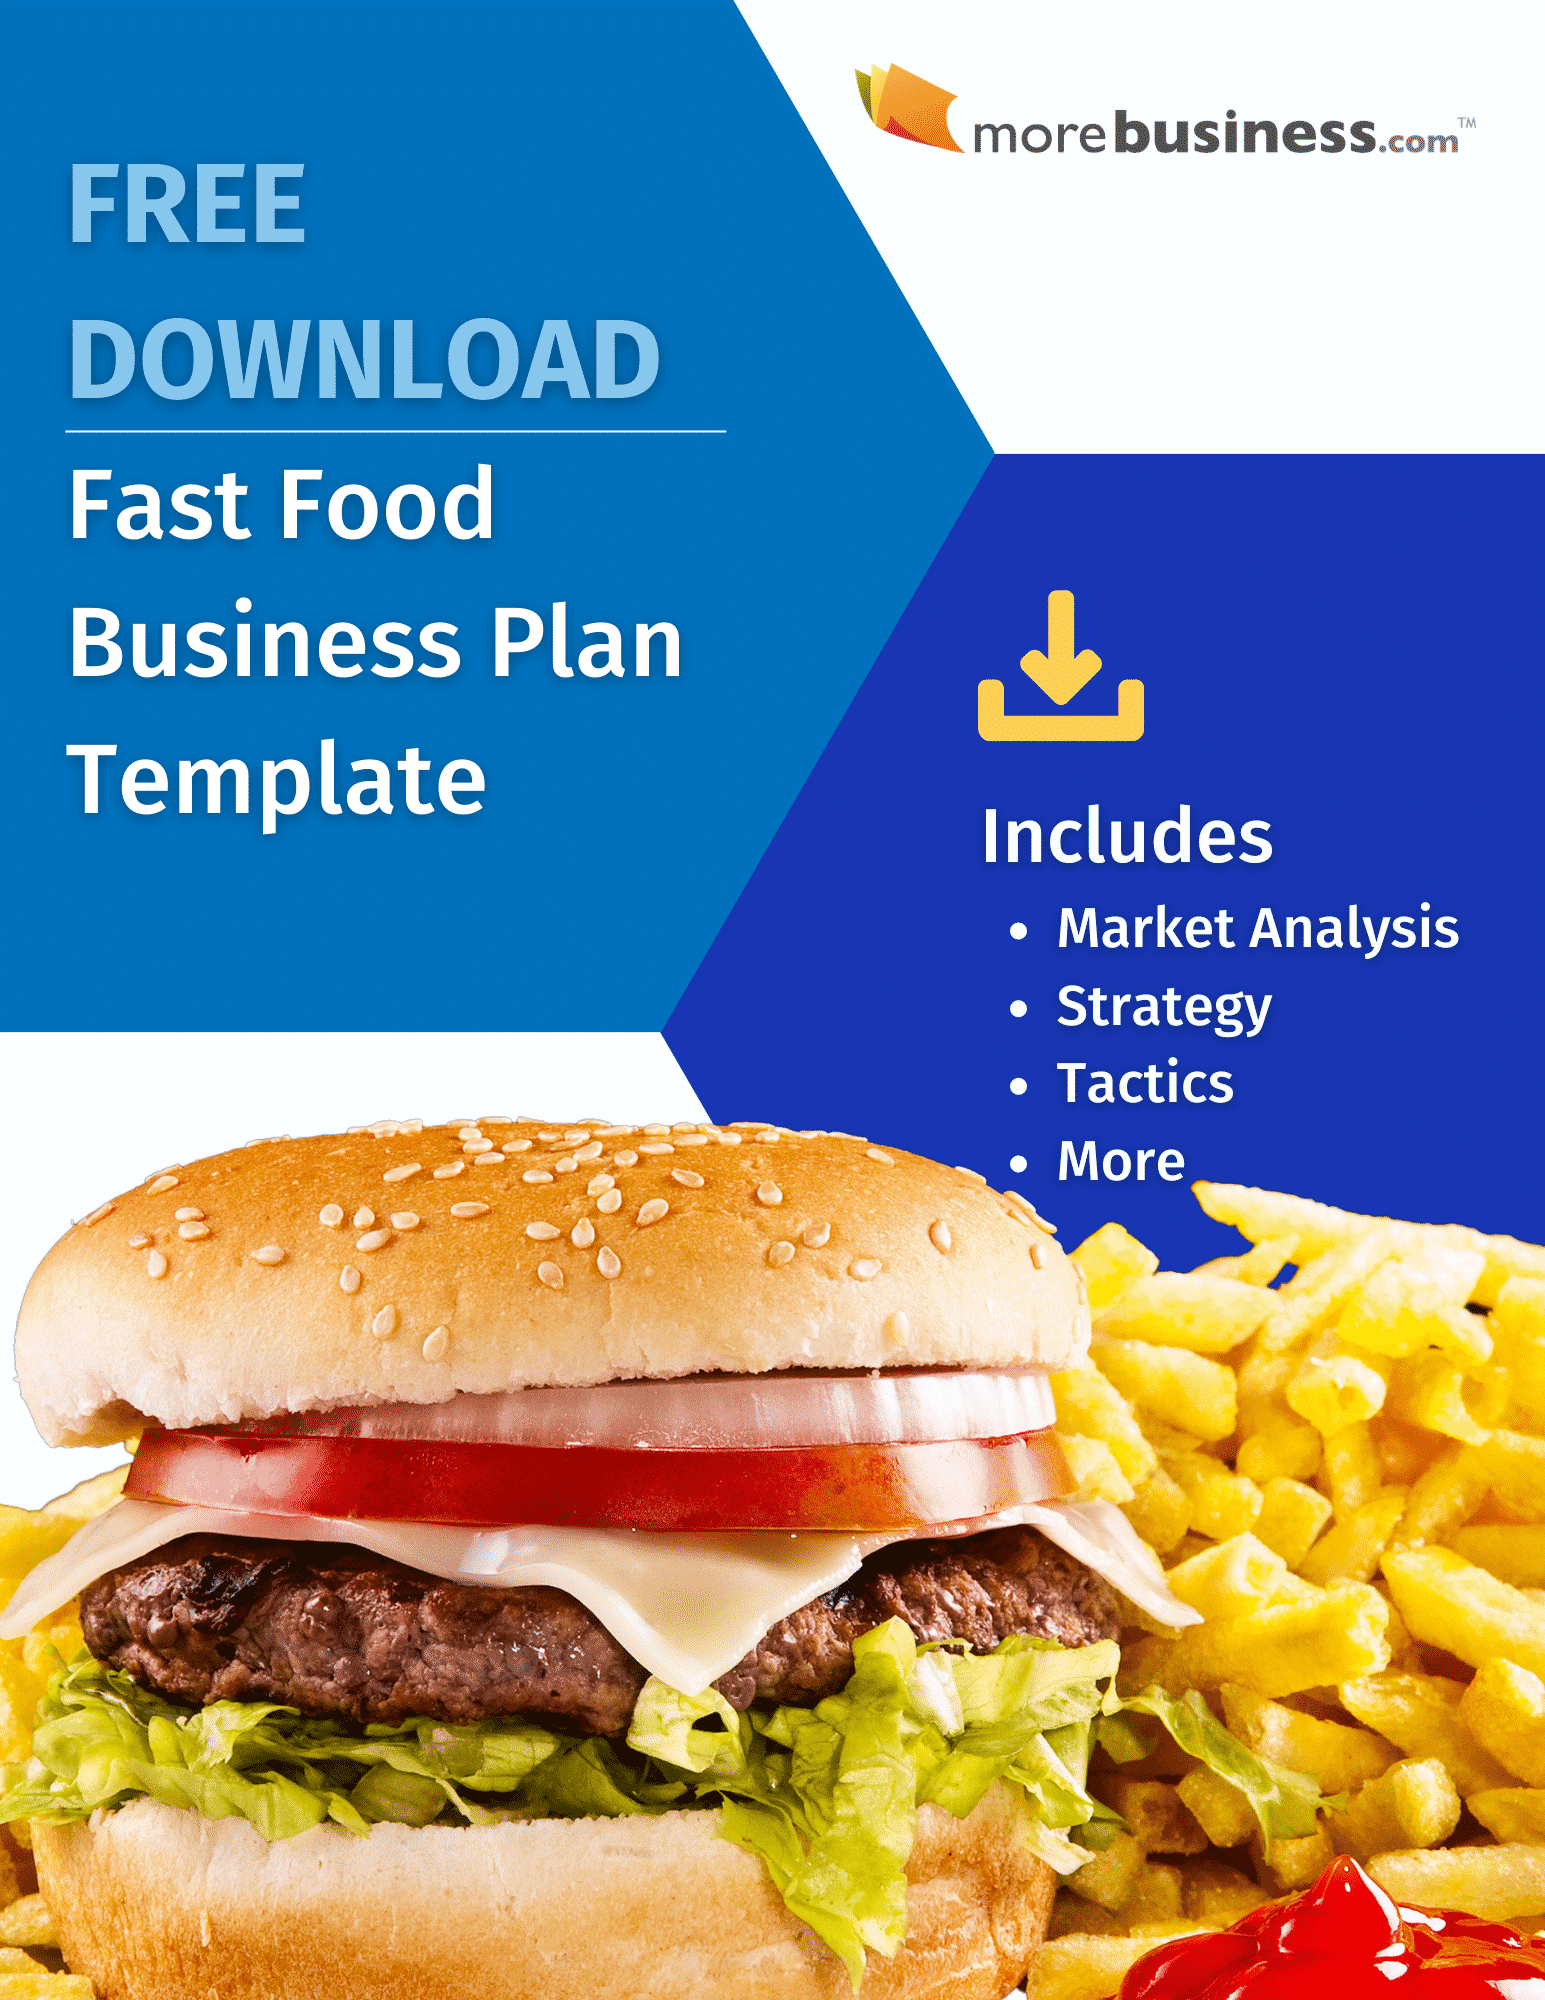 Fast Food Restaurant Business Plan  MoreBusiness.com